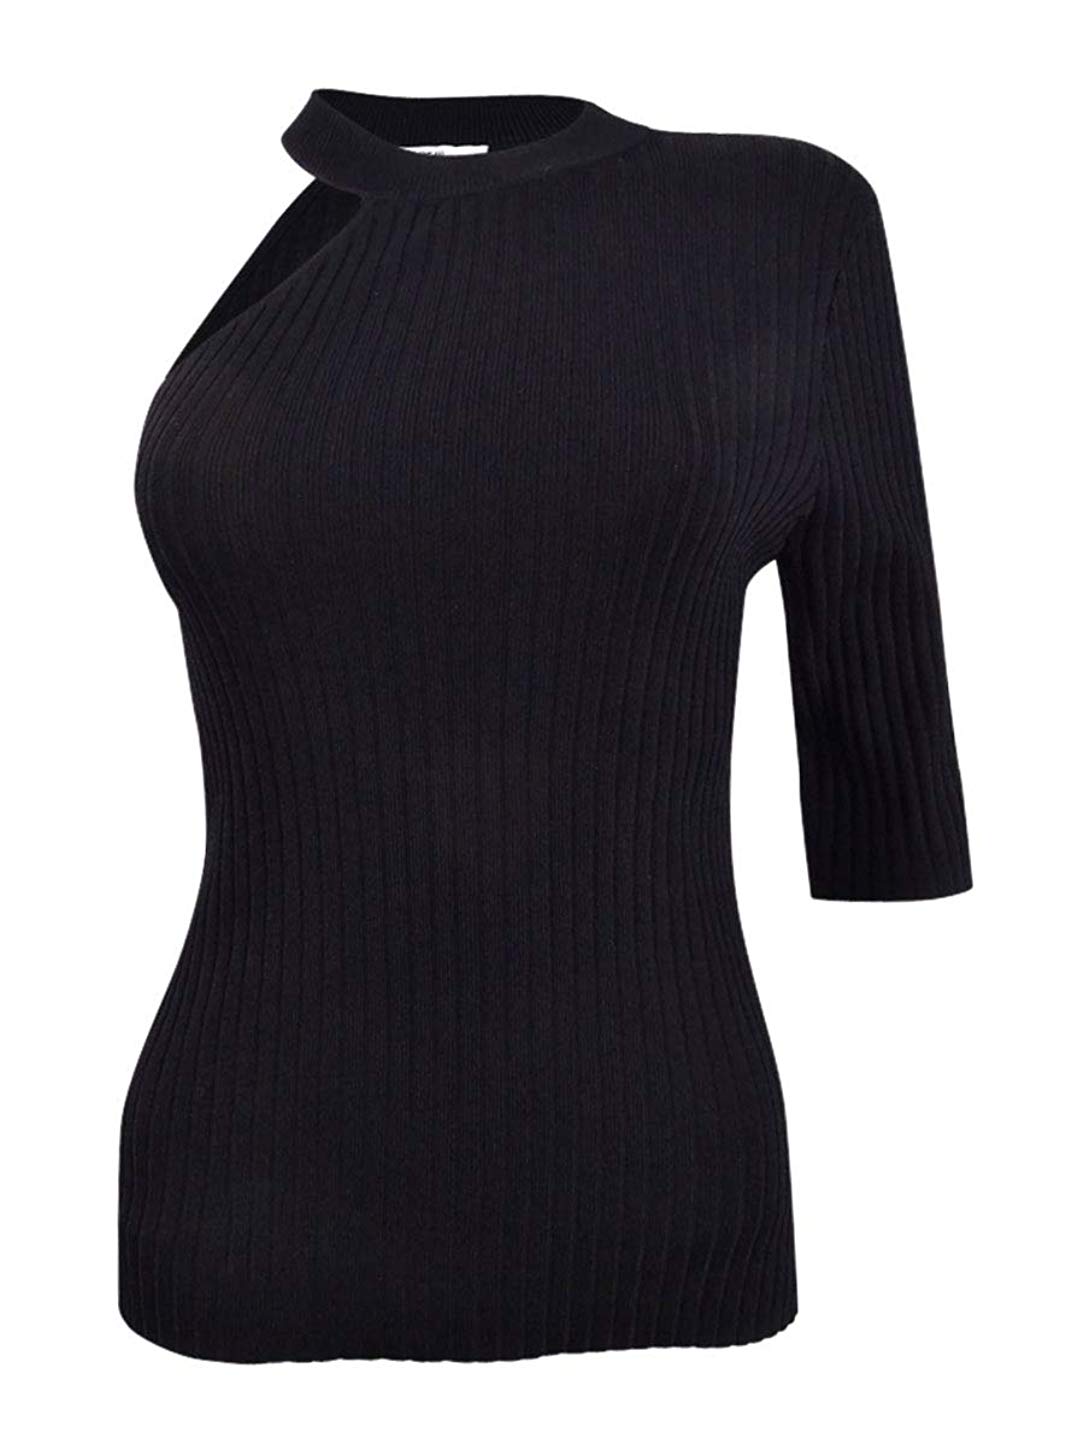 BAR III Cutout Pullover Sweater Black S